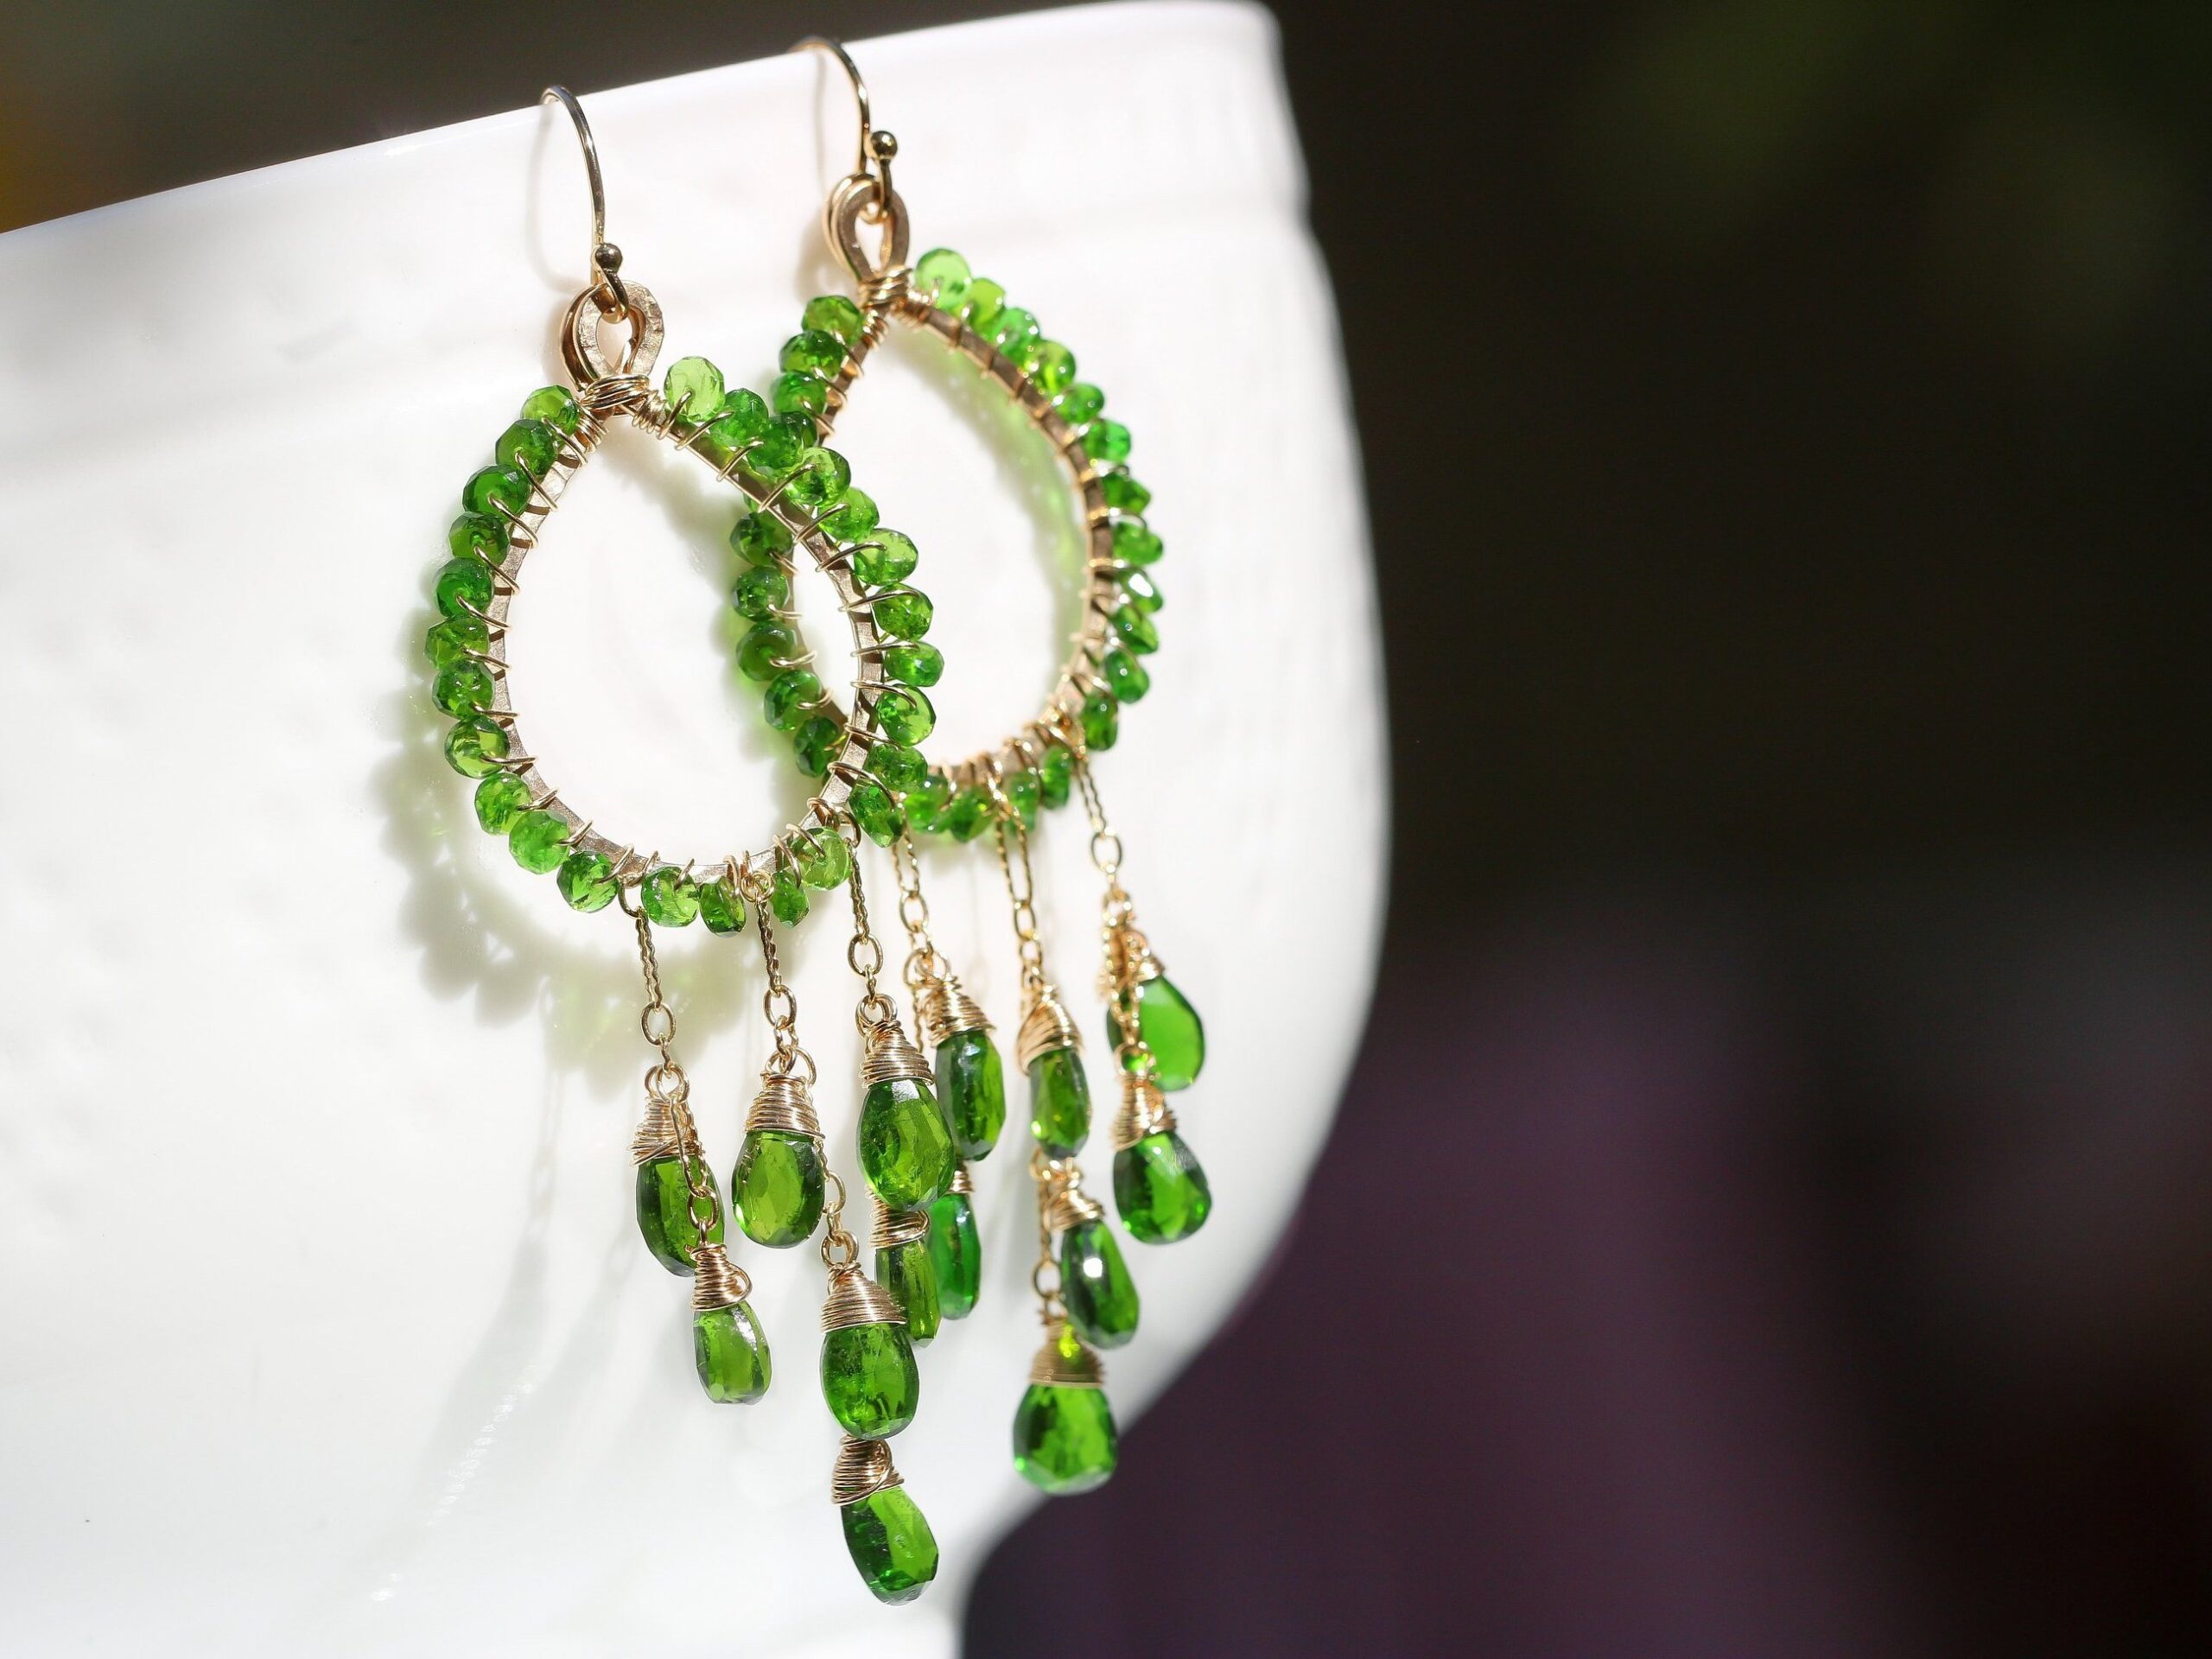 Chrome Diopside Green Chandelier Earrings in Gold Filled, Wire Wrapped Hoop Gemstone Earrings